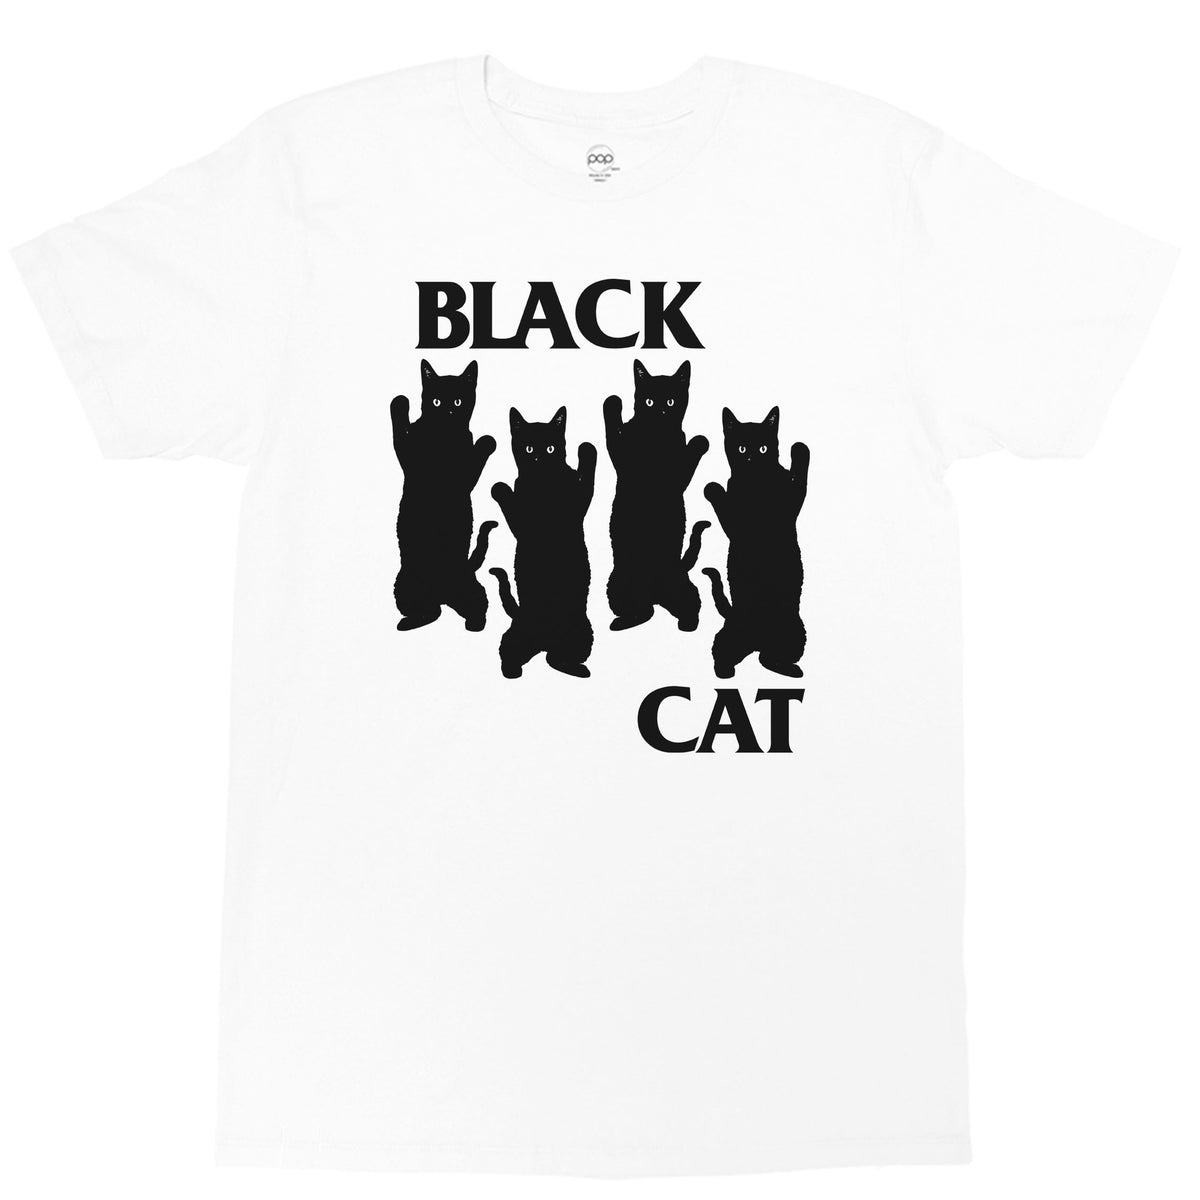 Official Black Flag Merchandise T-shirt